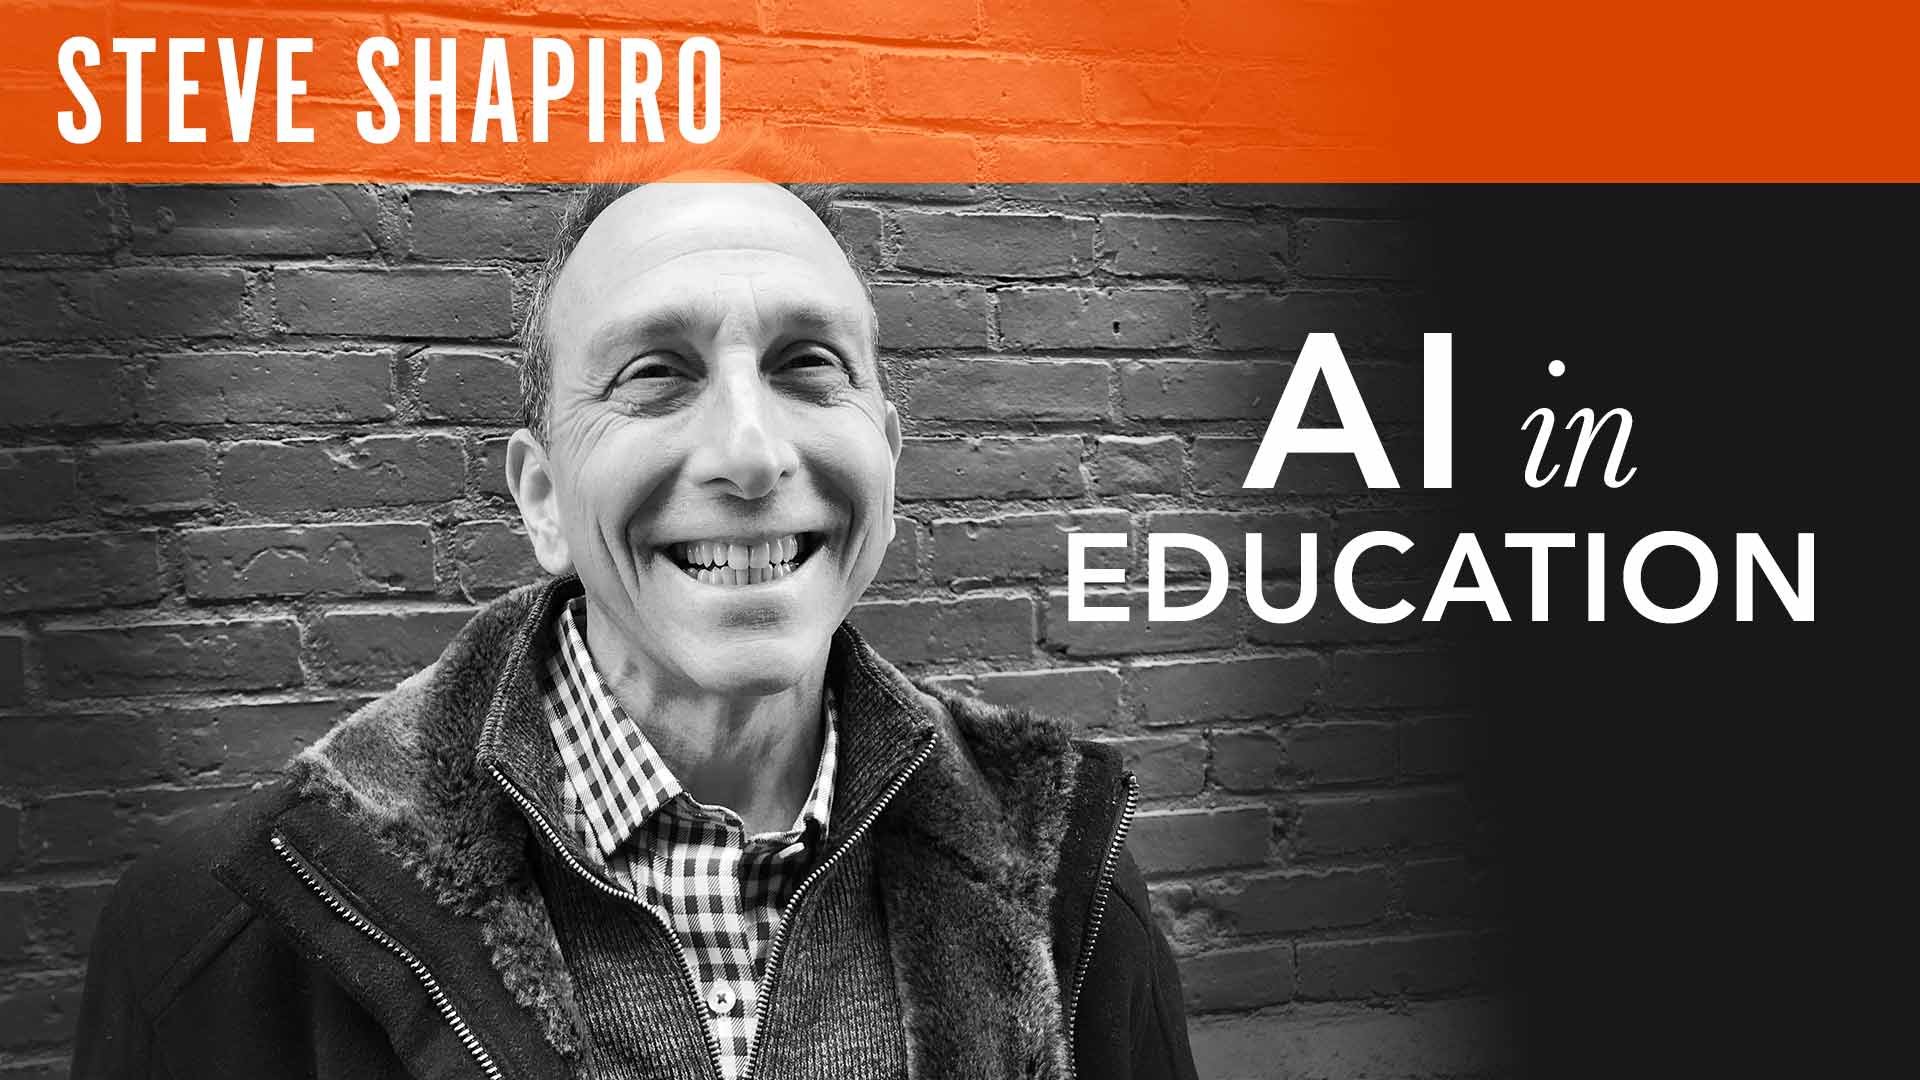 Steve Shapiro, "AI in Education"